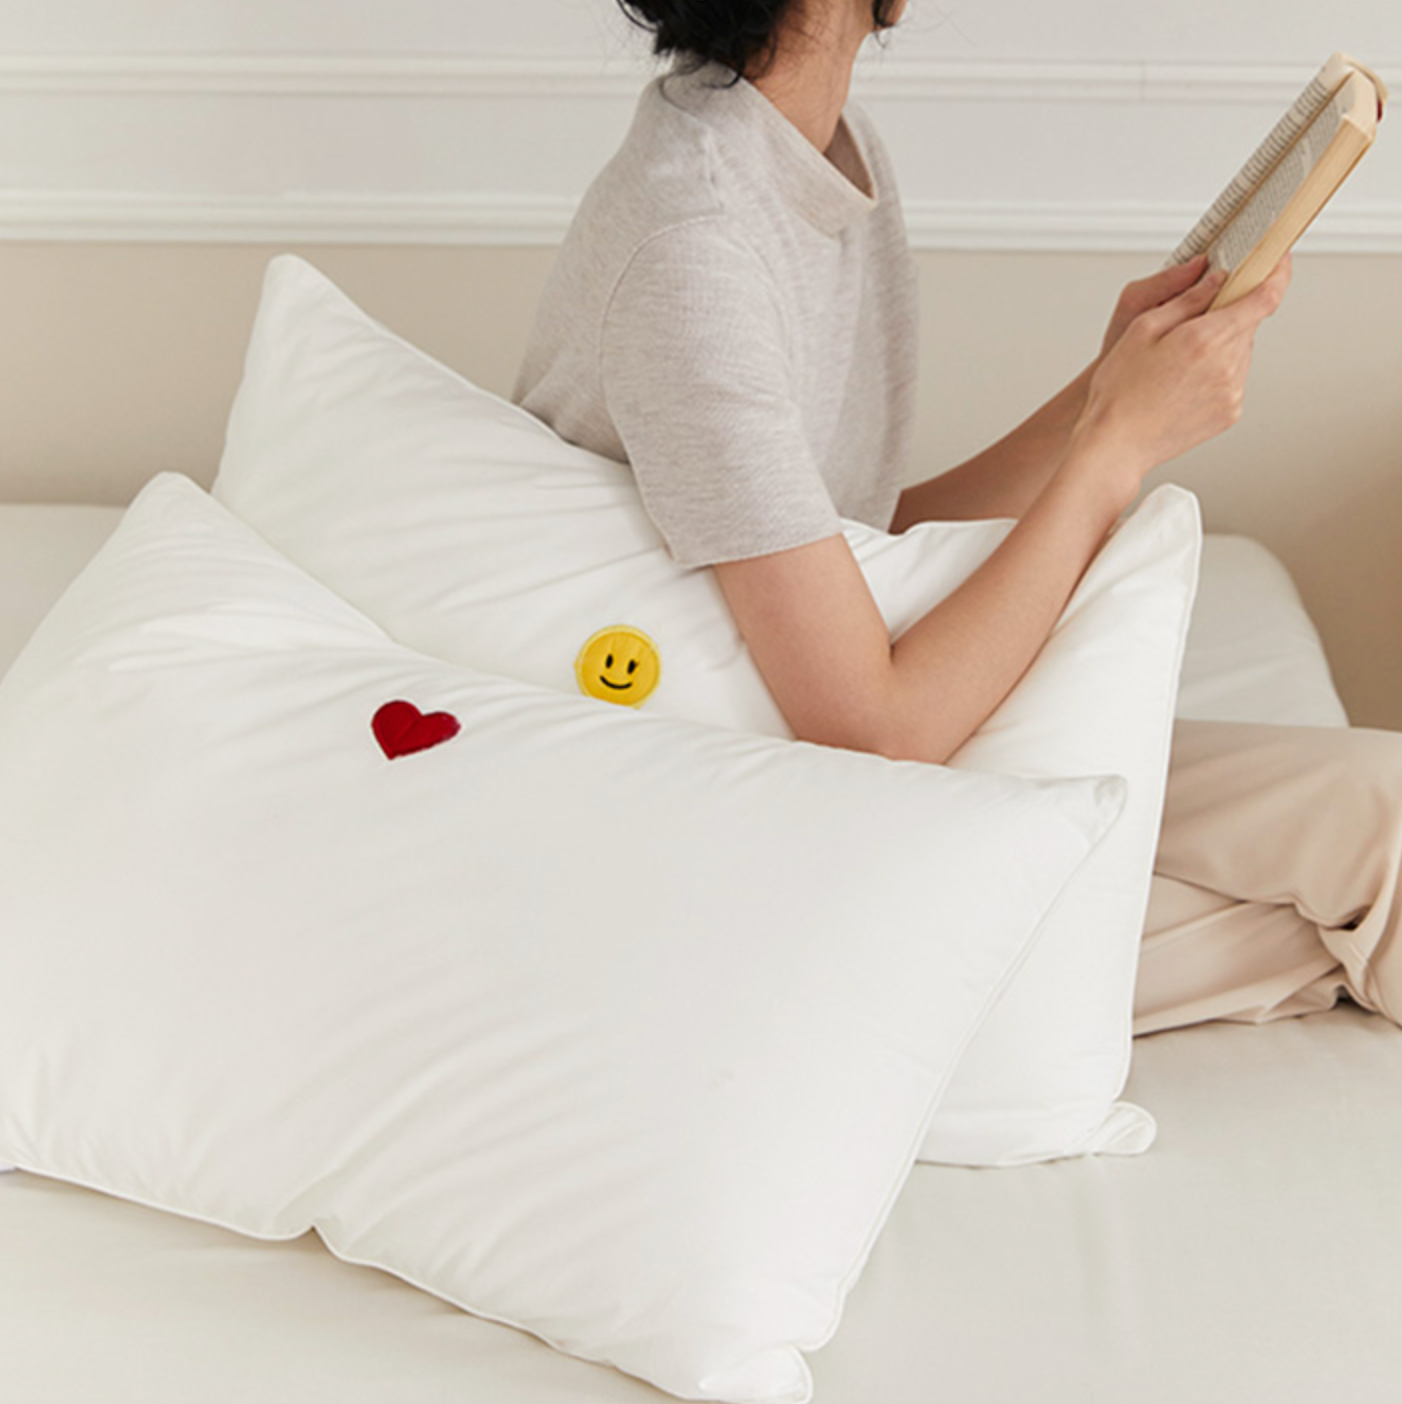 smile & heart design pillow